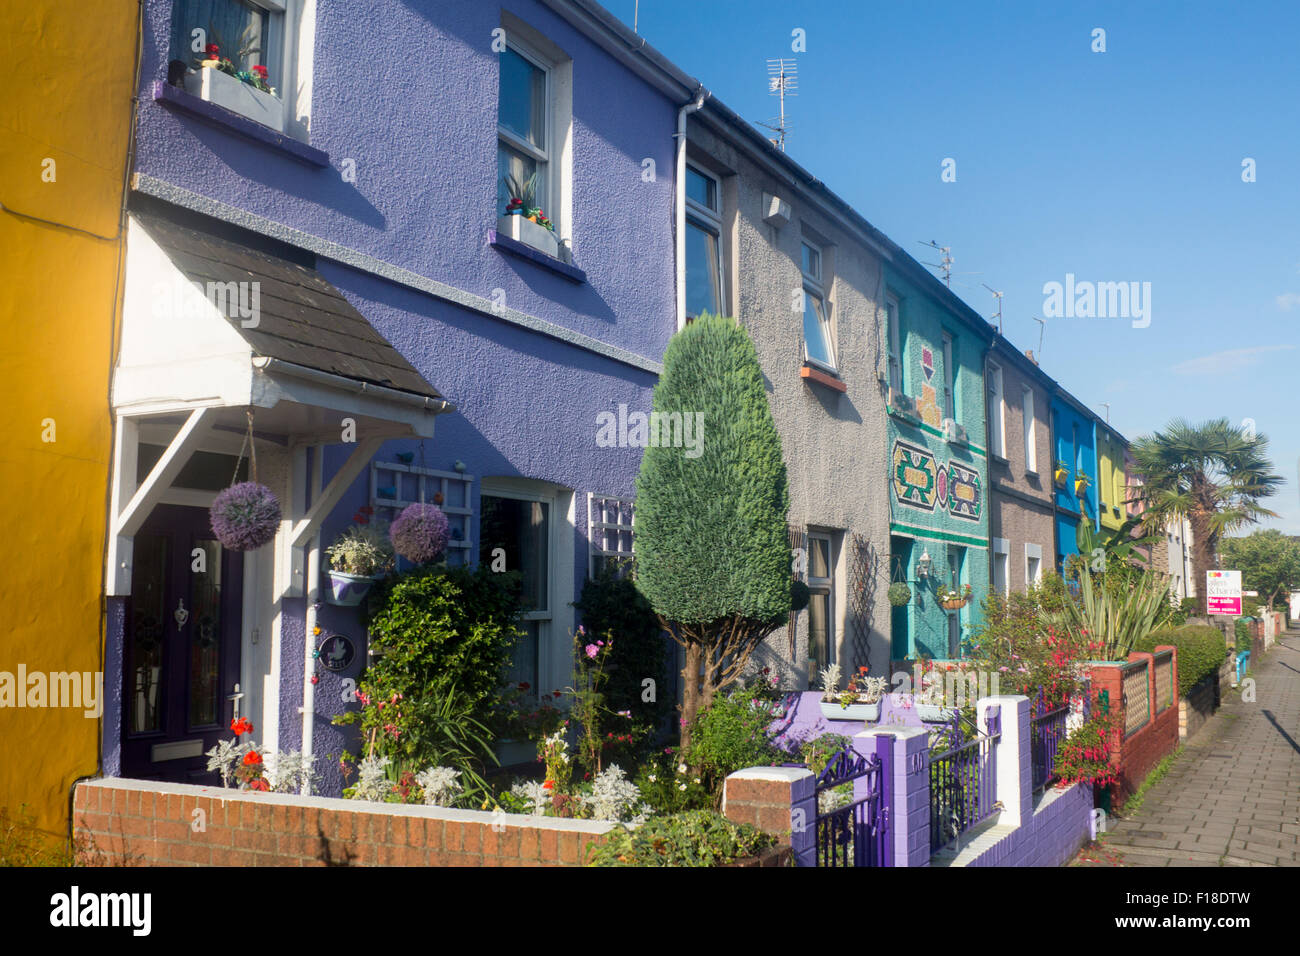 Bunt bemalte Terrasse Reihenhaus Häuser Ferienhäuser Roath Cardiff Wales UK Stockfoto